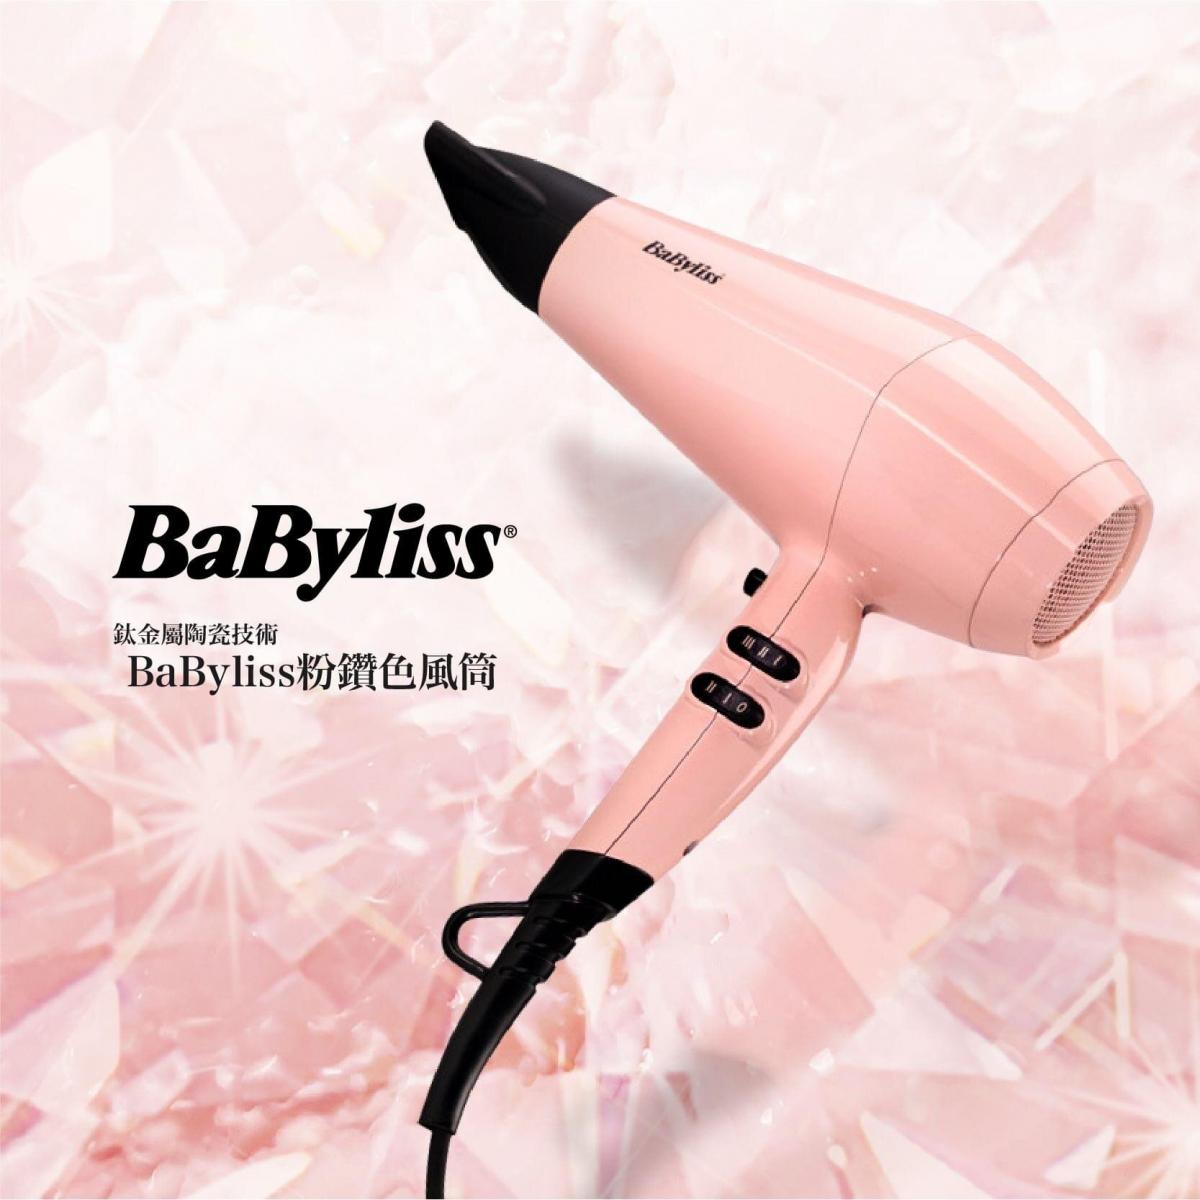 Buy BaByliss Travel Hairdryer 1200W 5250E - Black | Nelly.com